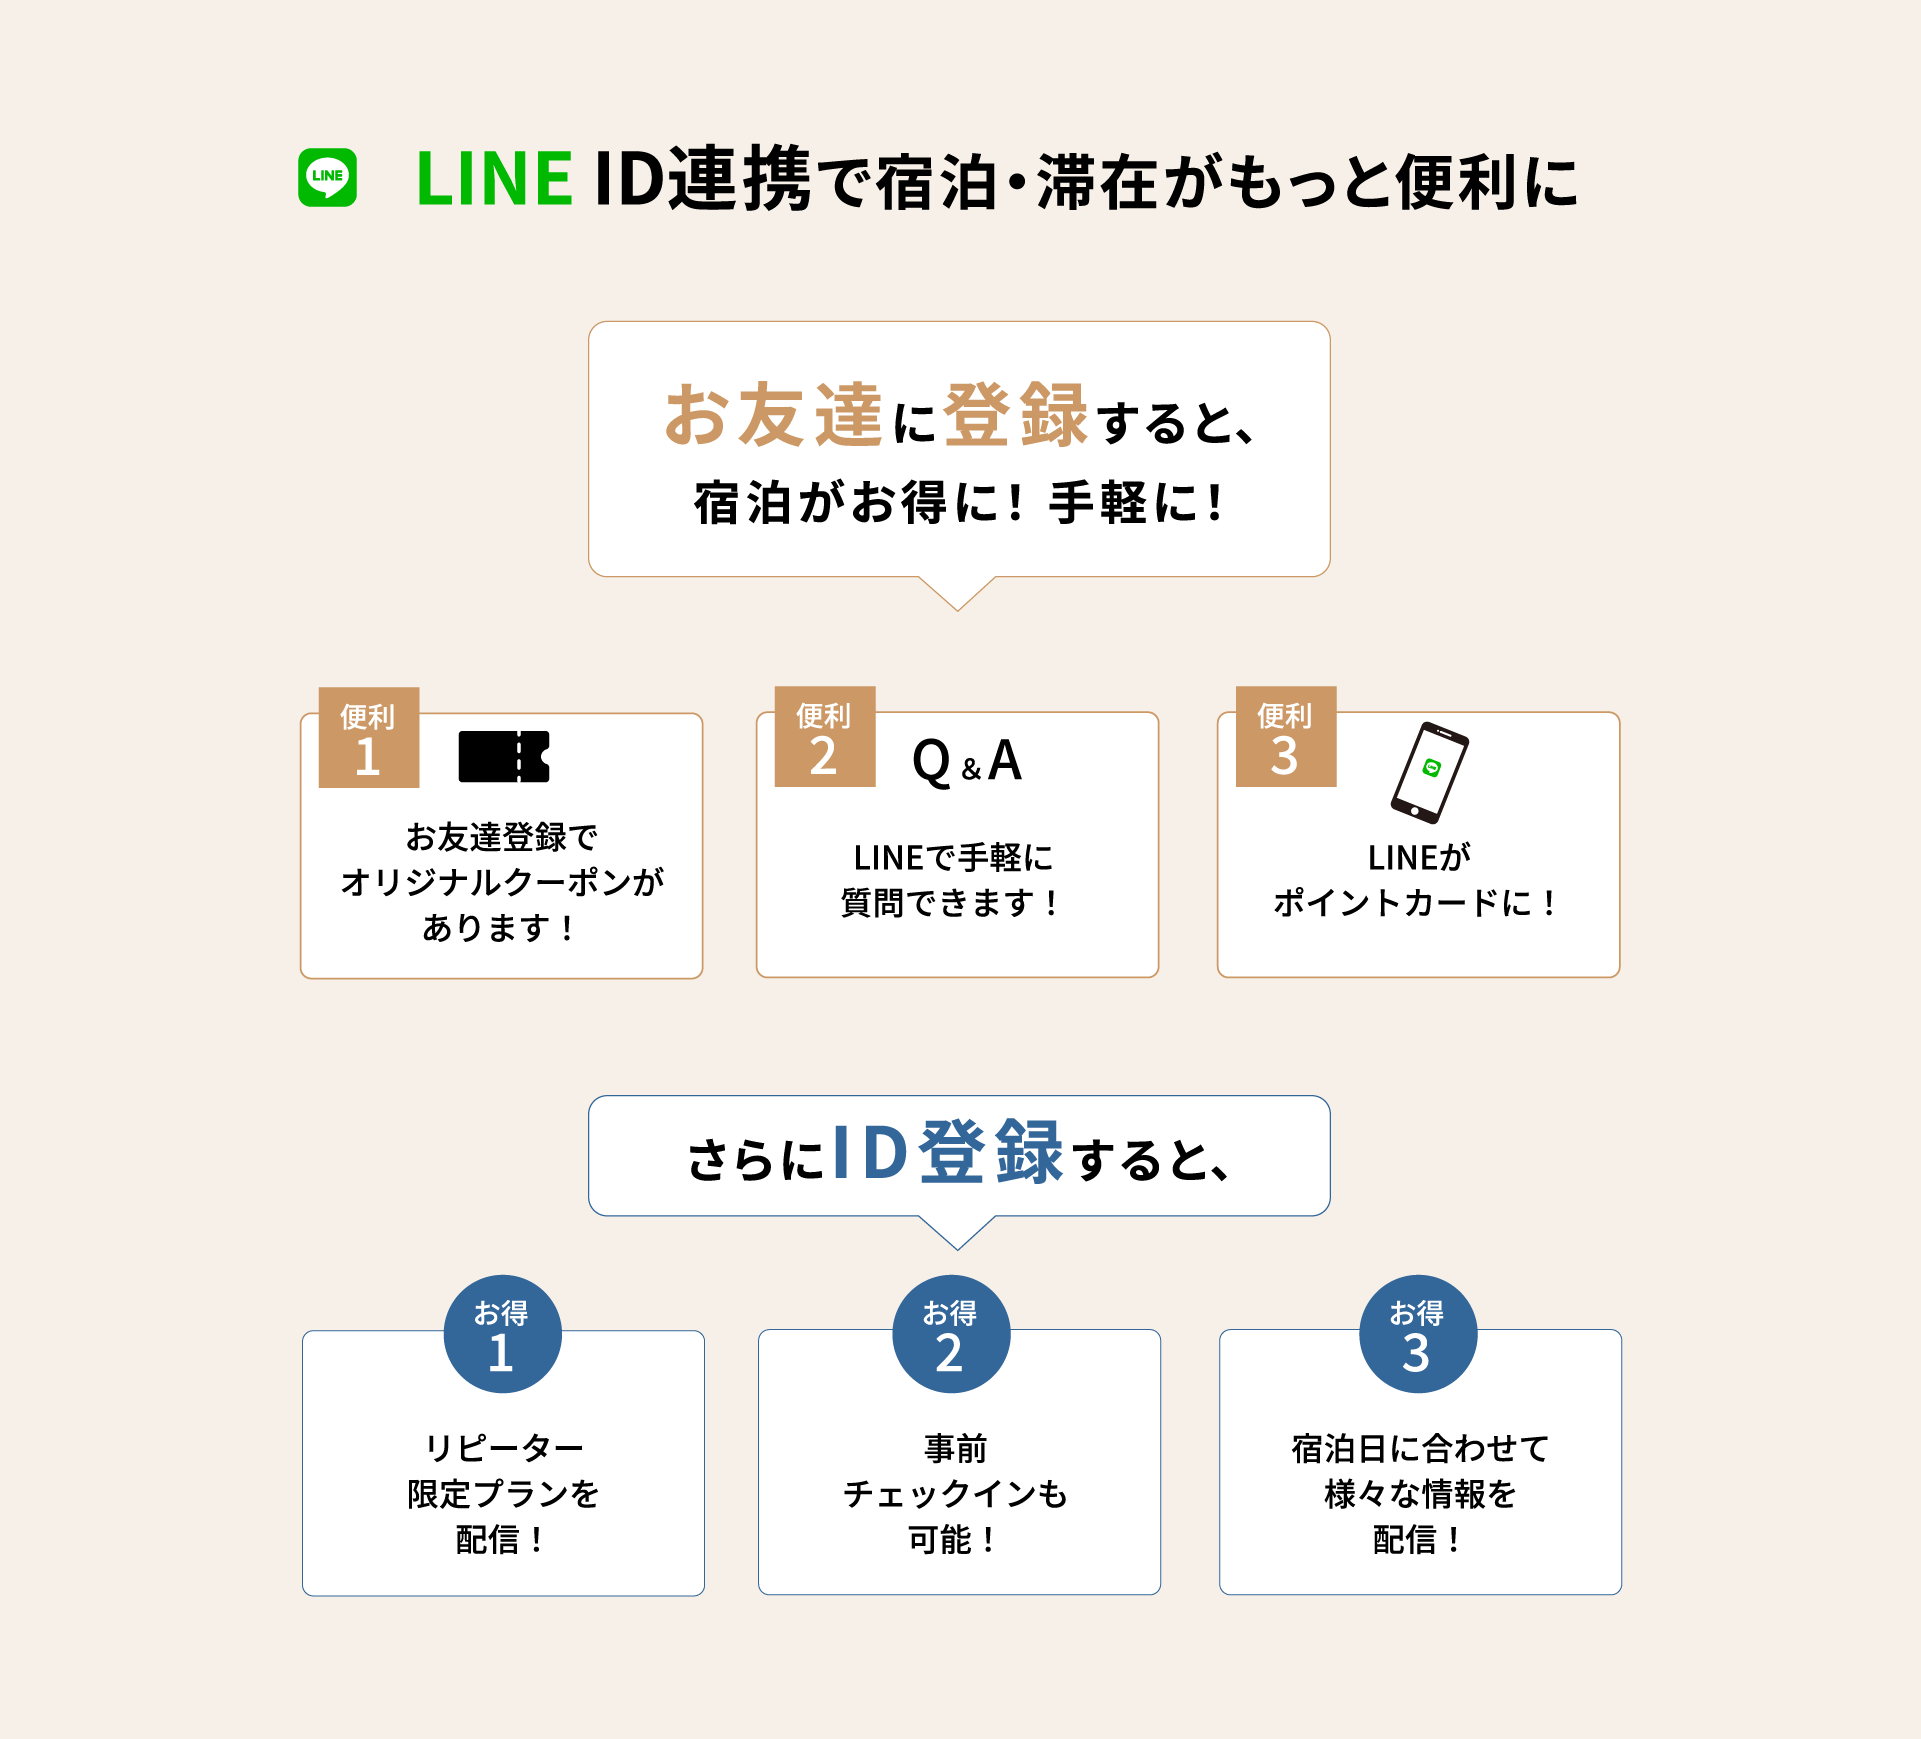 Line ID連携